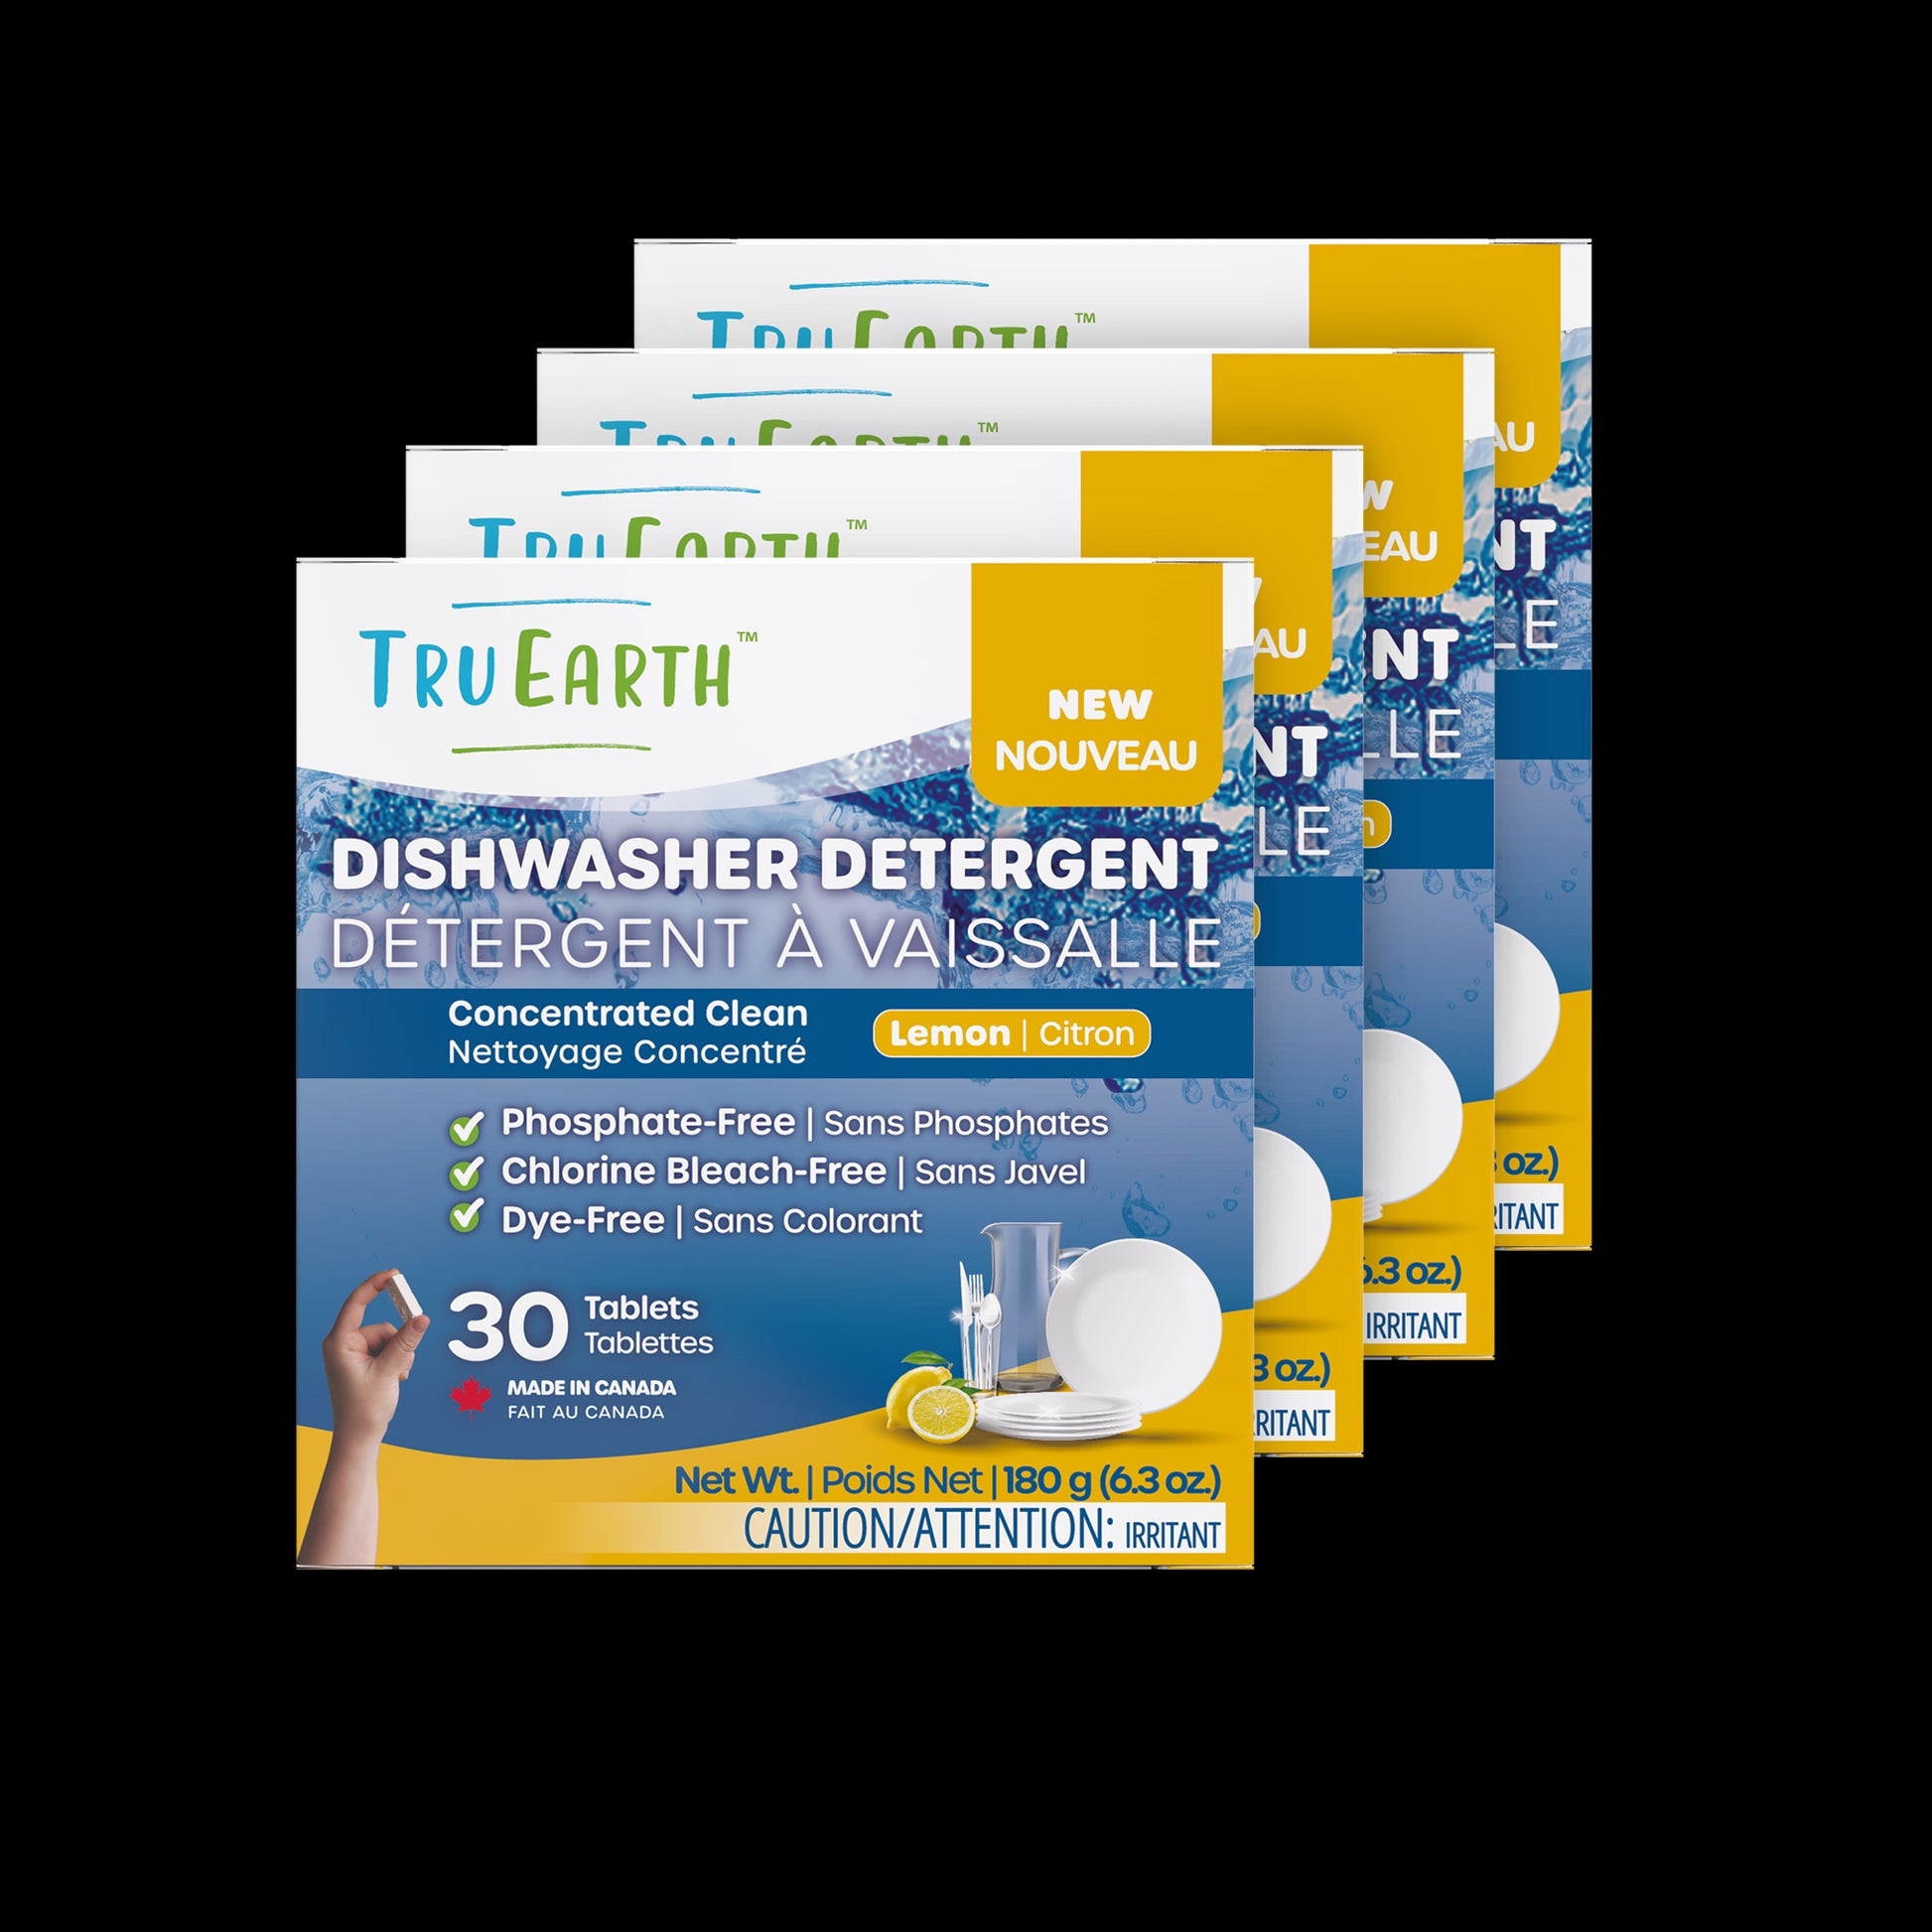 TruEarth Dishwasher Detergent Lemon Front of Package